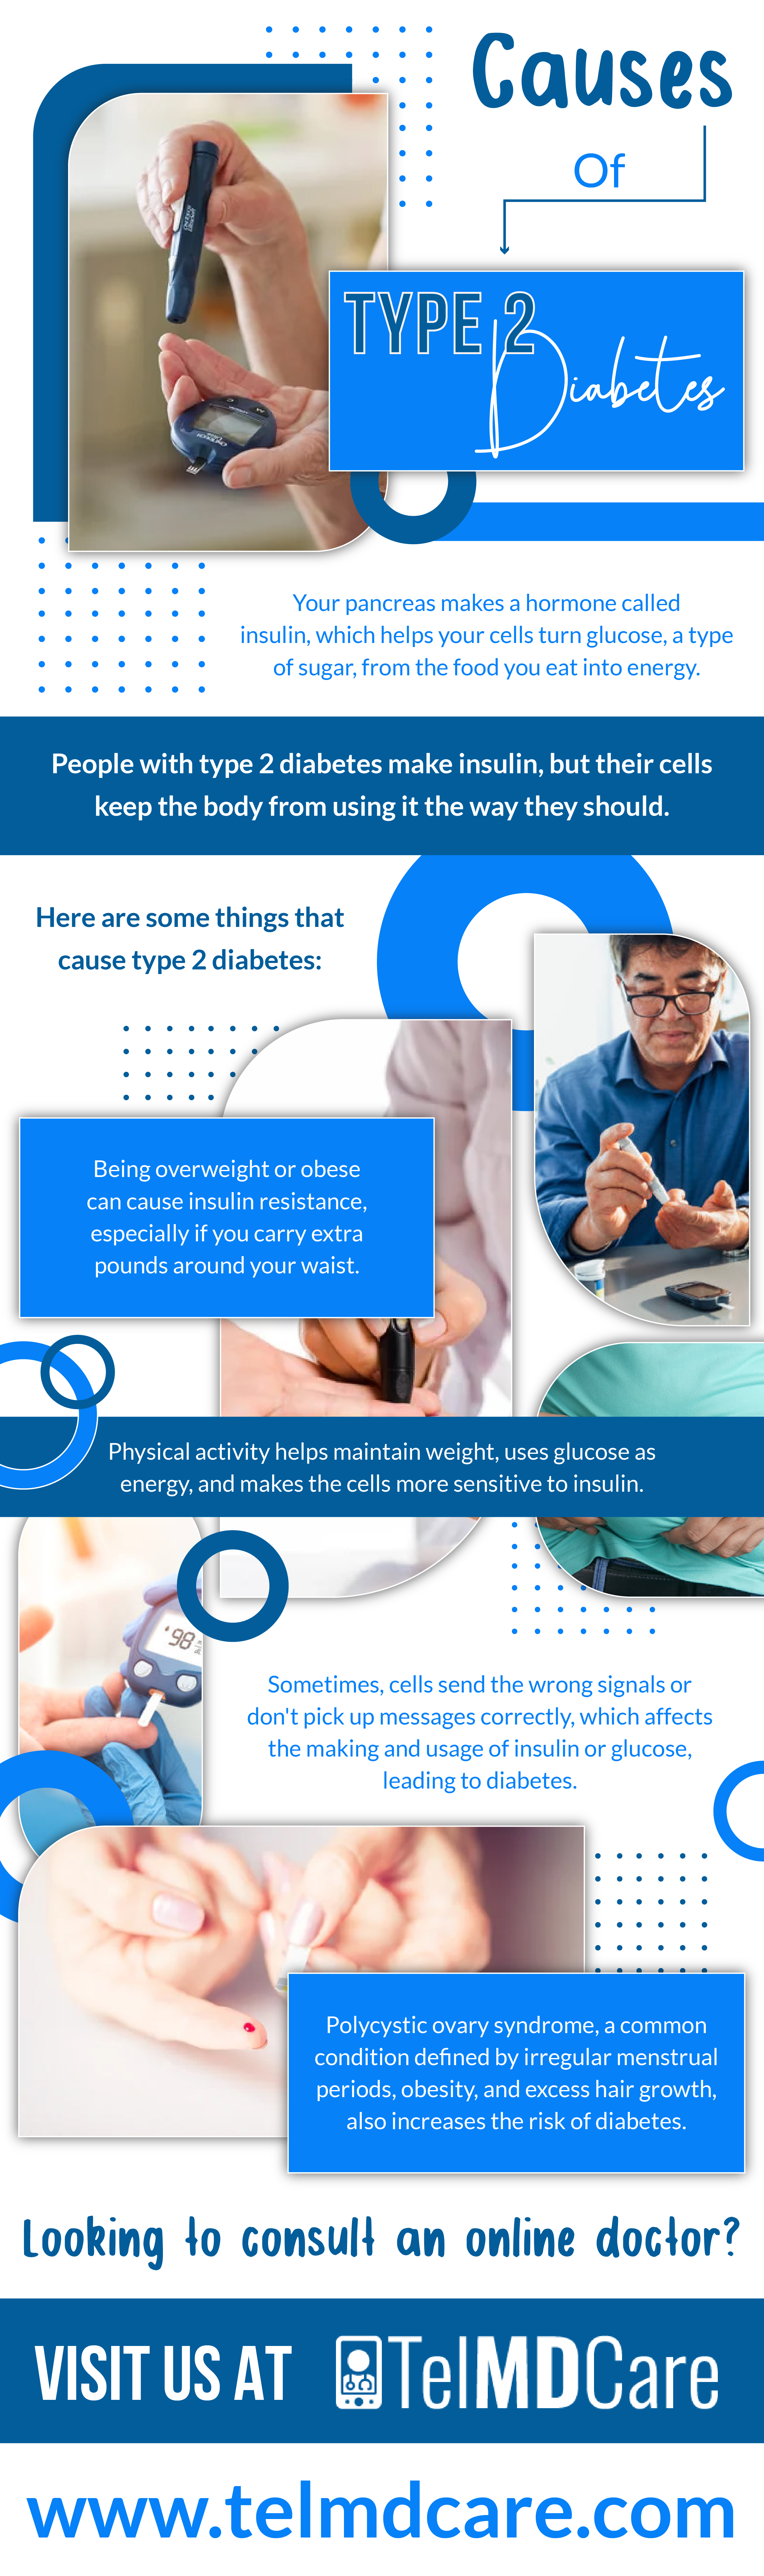 Causes of Diabetes Type 2